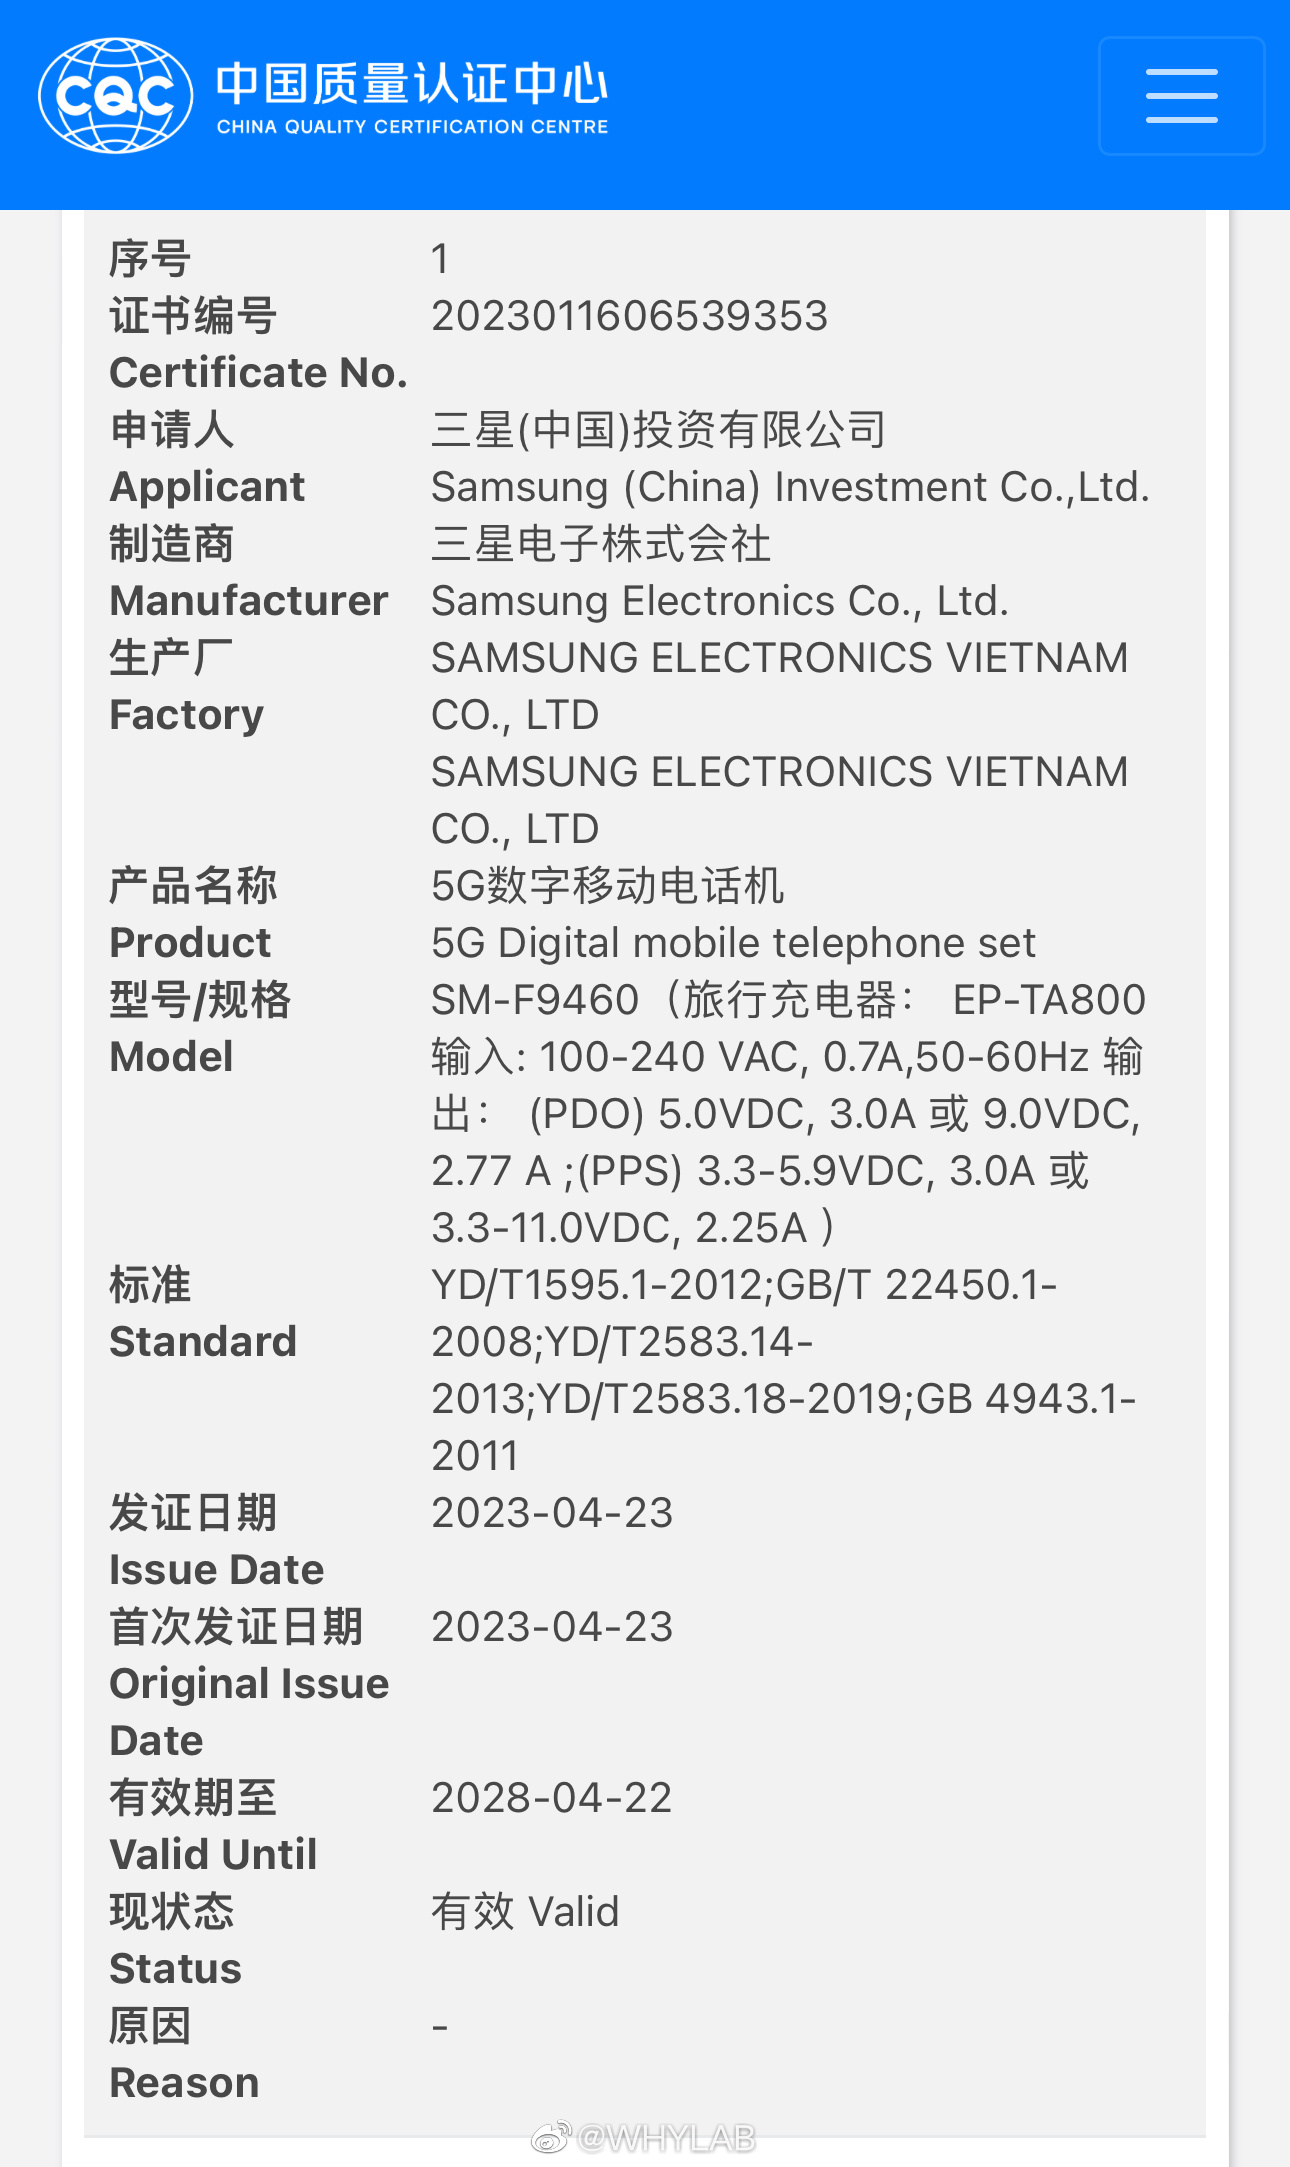  Samsung Galaxy Z Flip 5 и Fold 5: новые секреты Samsung  - ne_opat_a_snova_novye_sekrety_samsung_galaxy_z_flip_5_i_fold_5_1